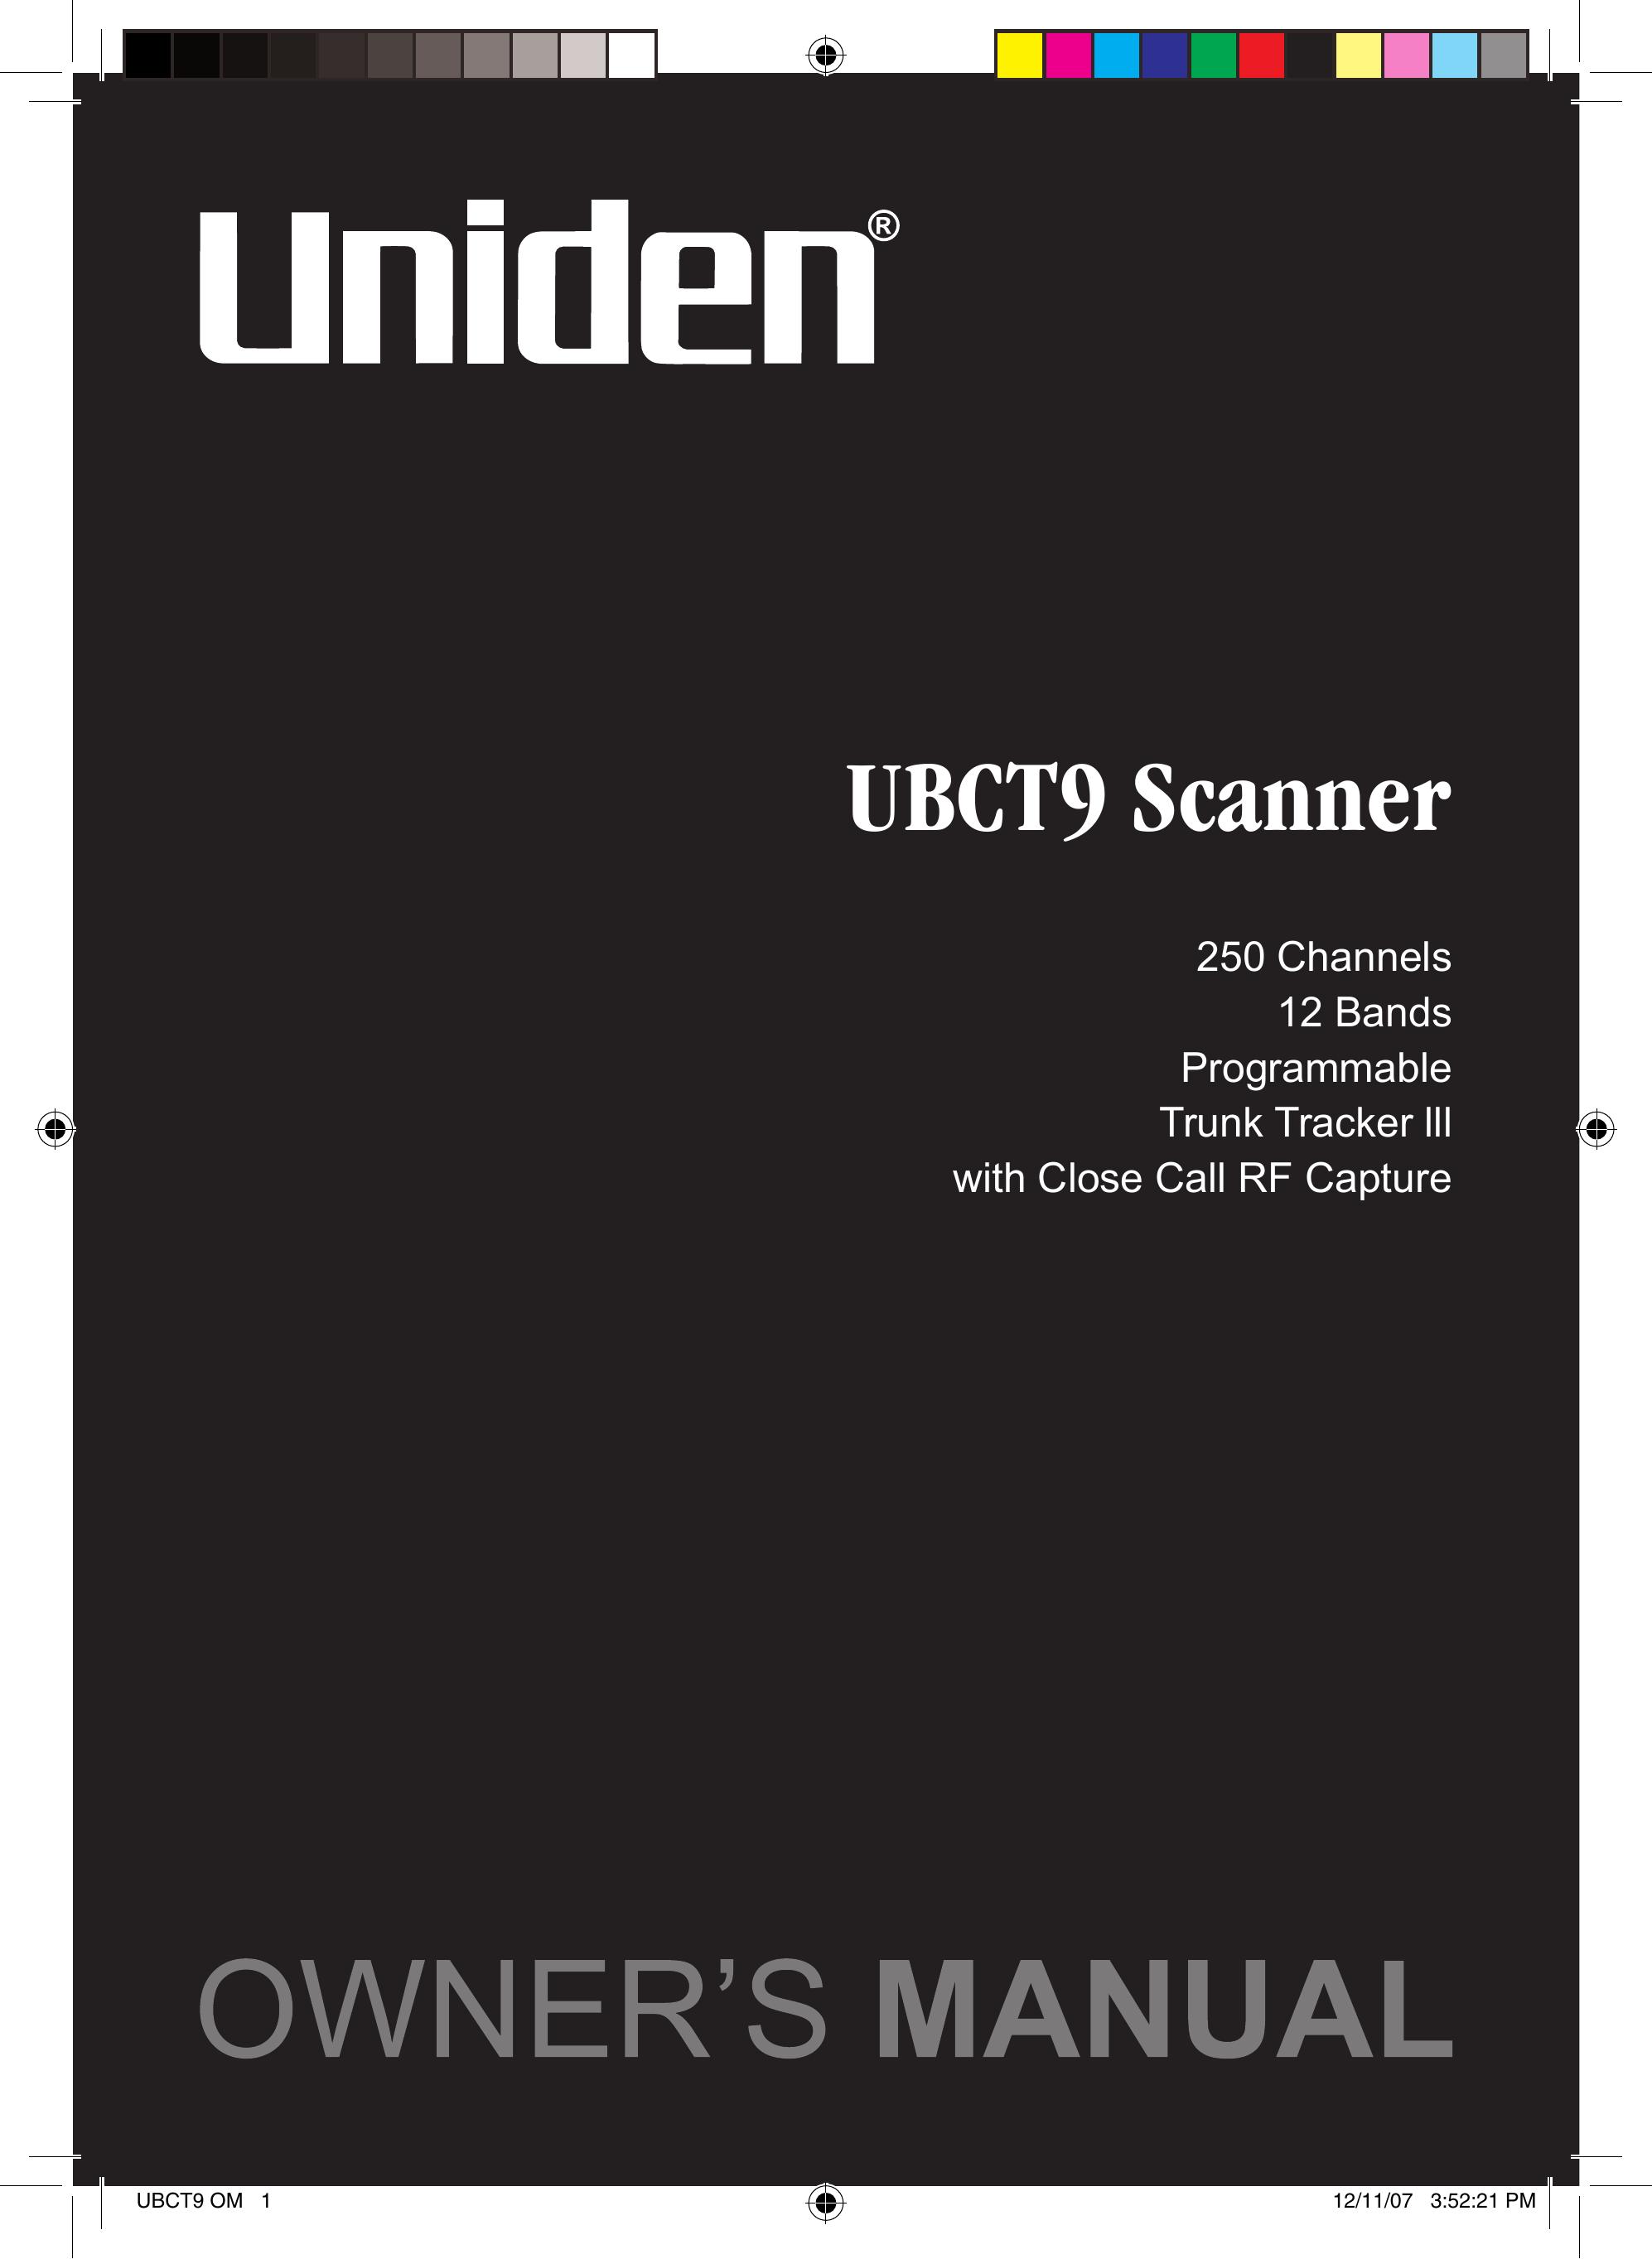 Uniden UBCT9 Photo Scanner User Manual